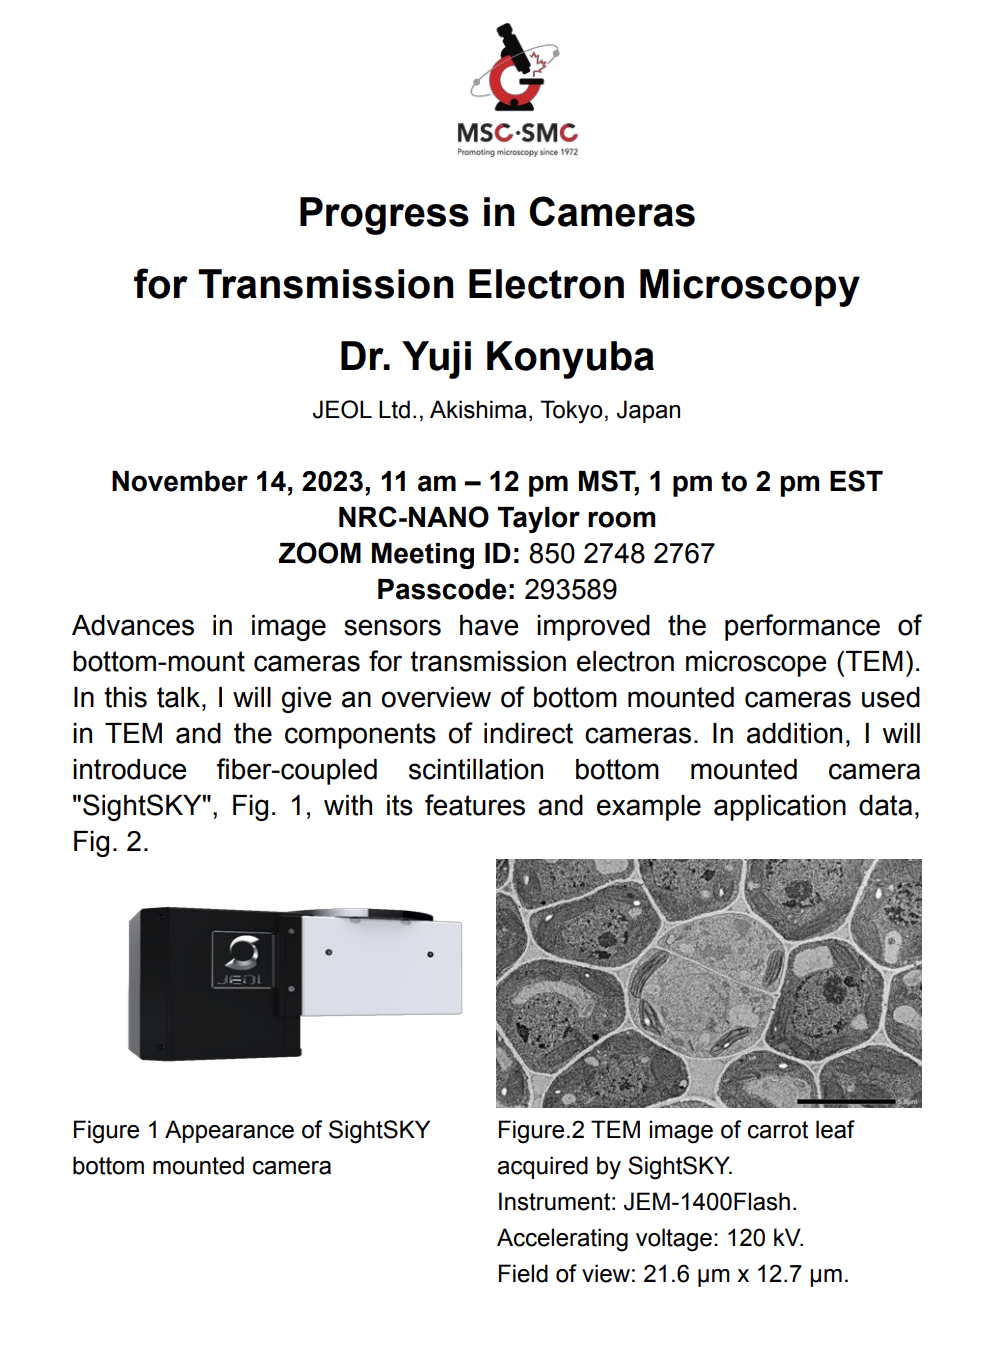 Progress in Cameras for Transmission Electron Microscopy